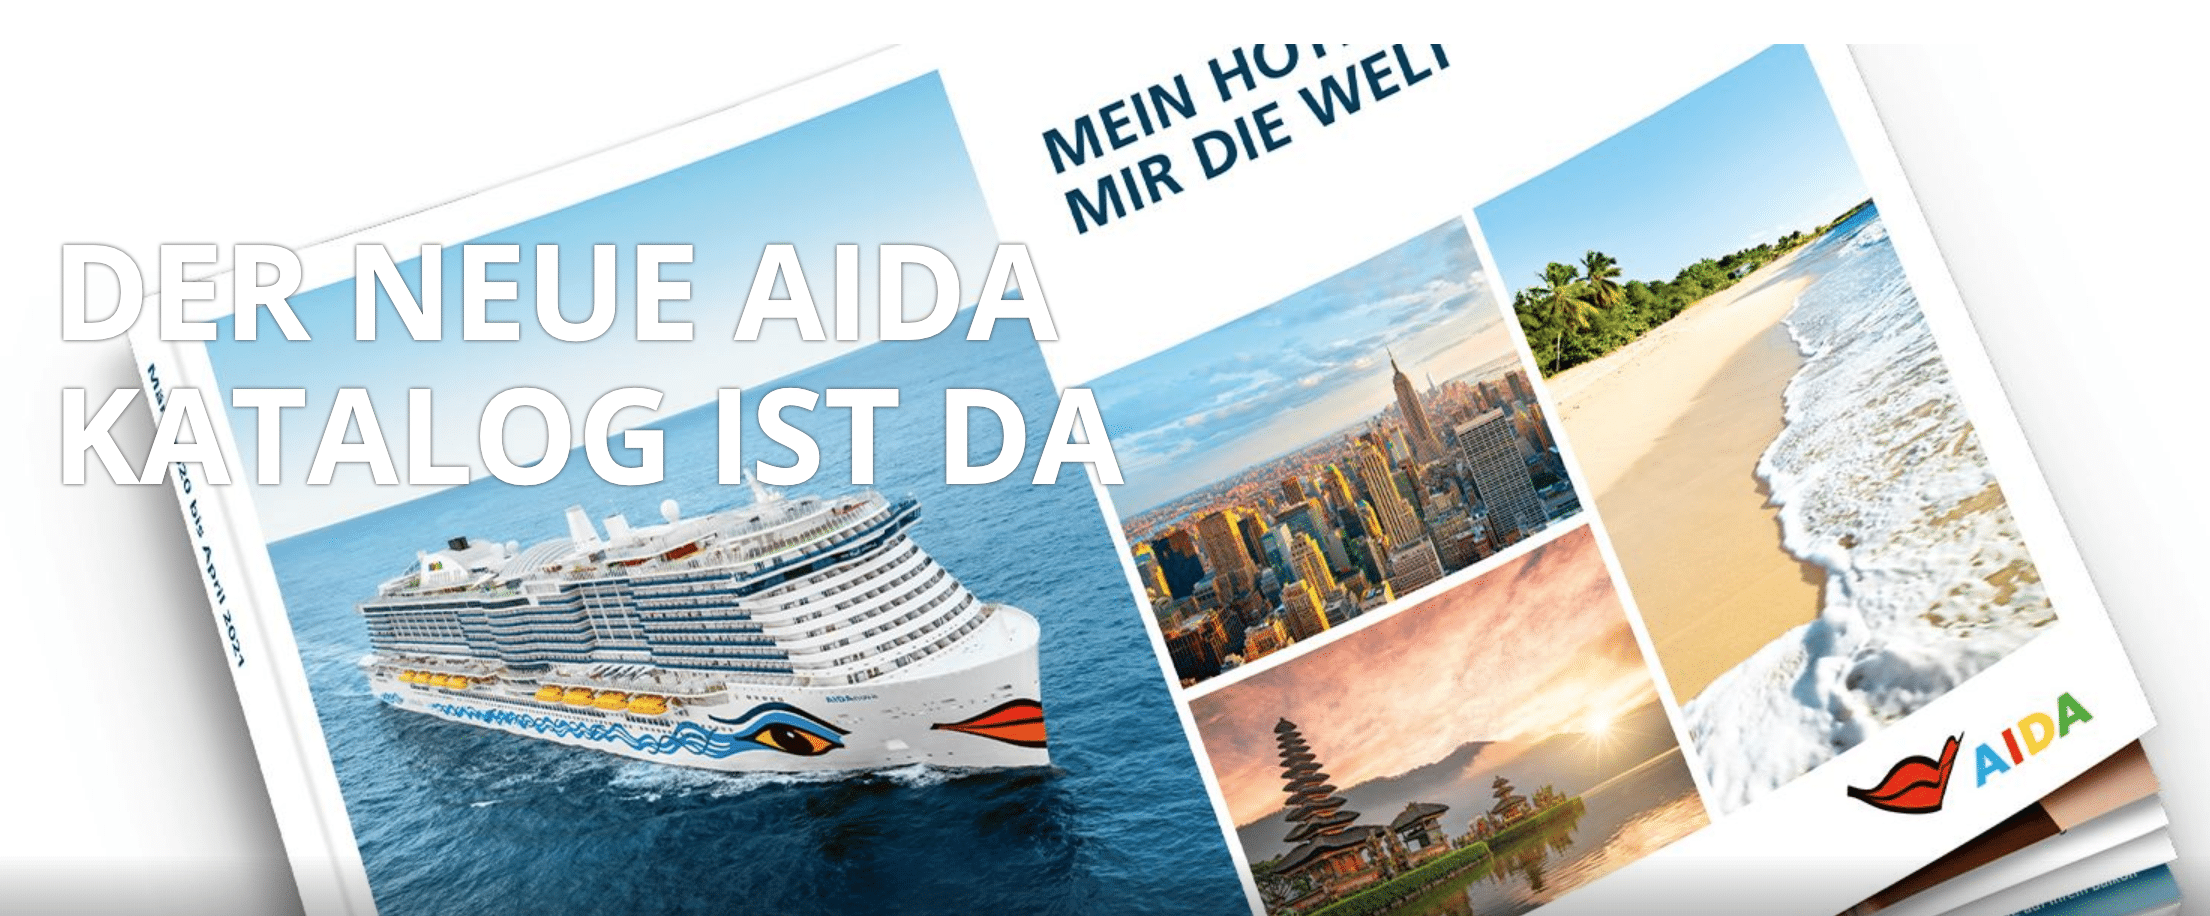 AIDA Cruises: Buchungsstart für den neuen Katalog 2021/22